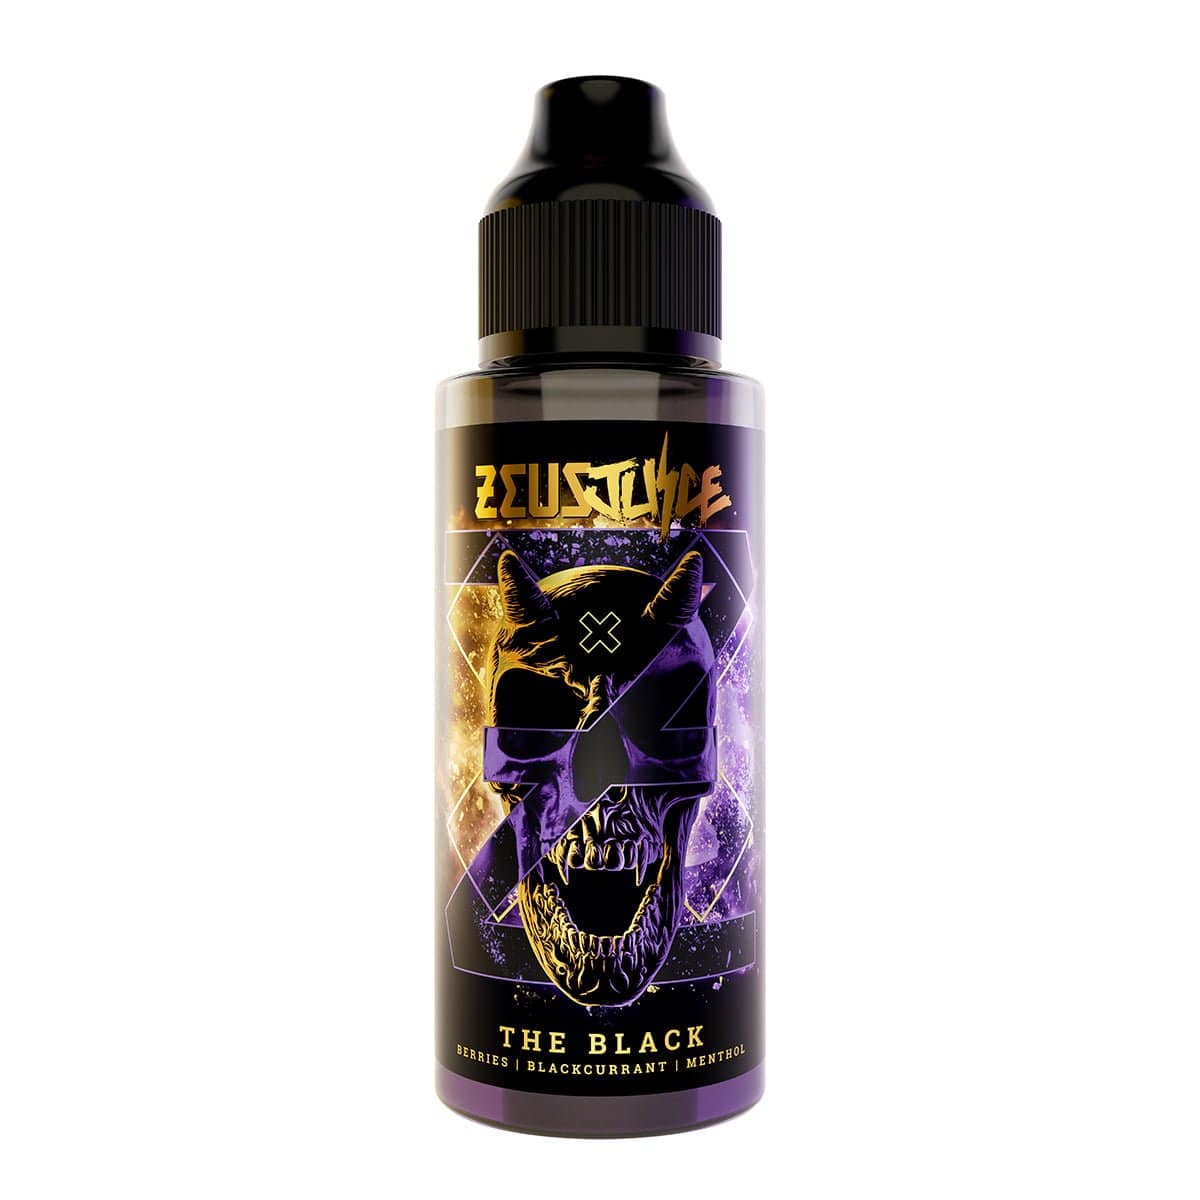 The Black by Zeus Juice - 100ml Short Fill E-Liquid